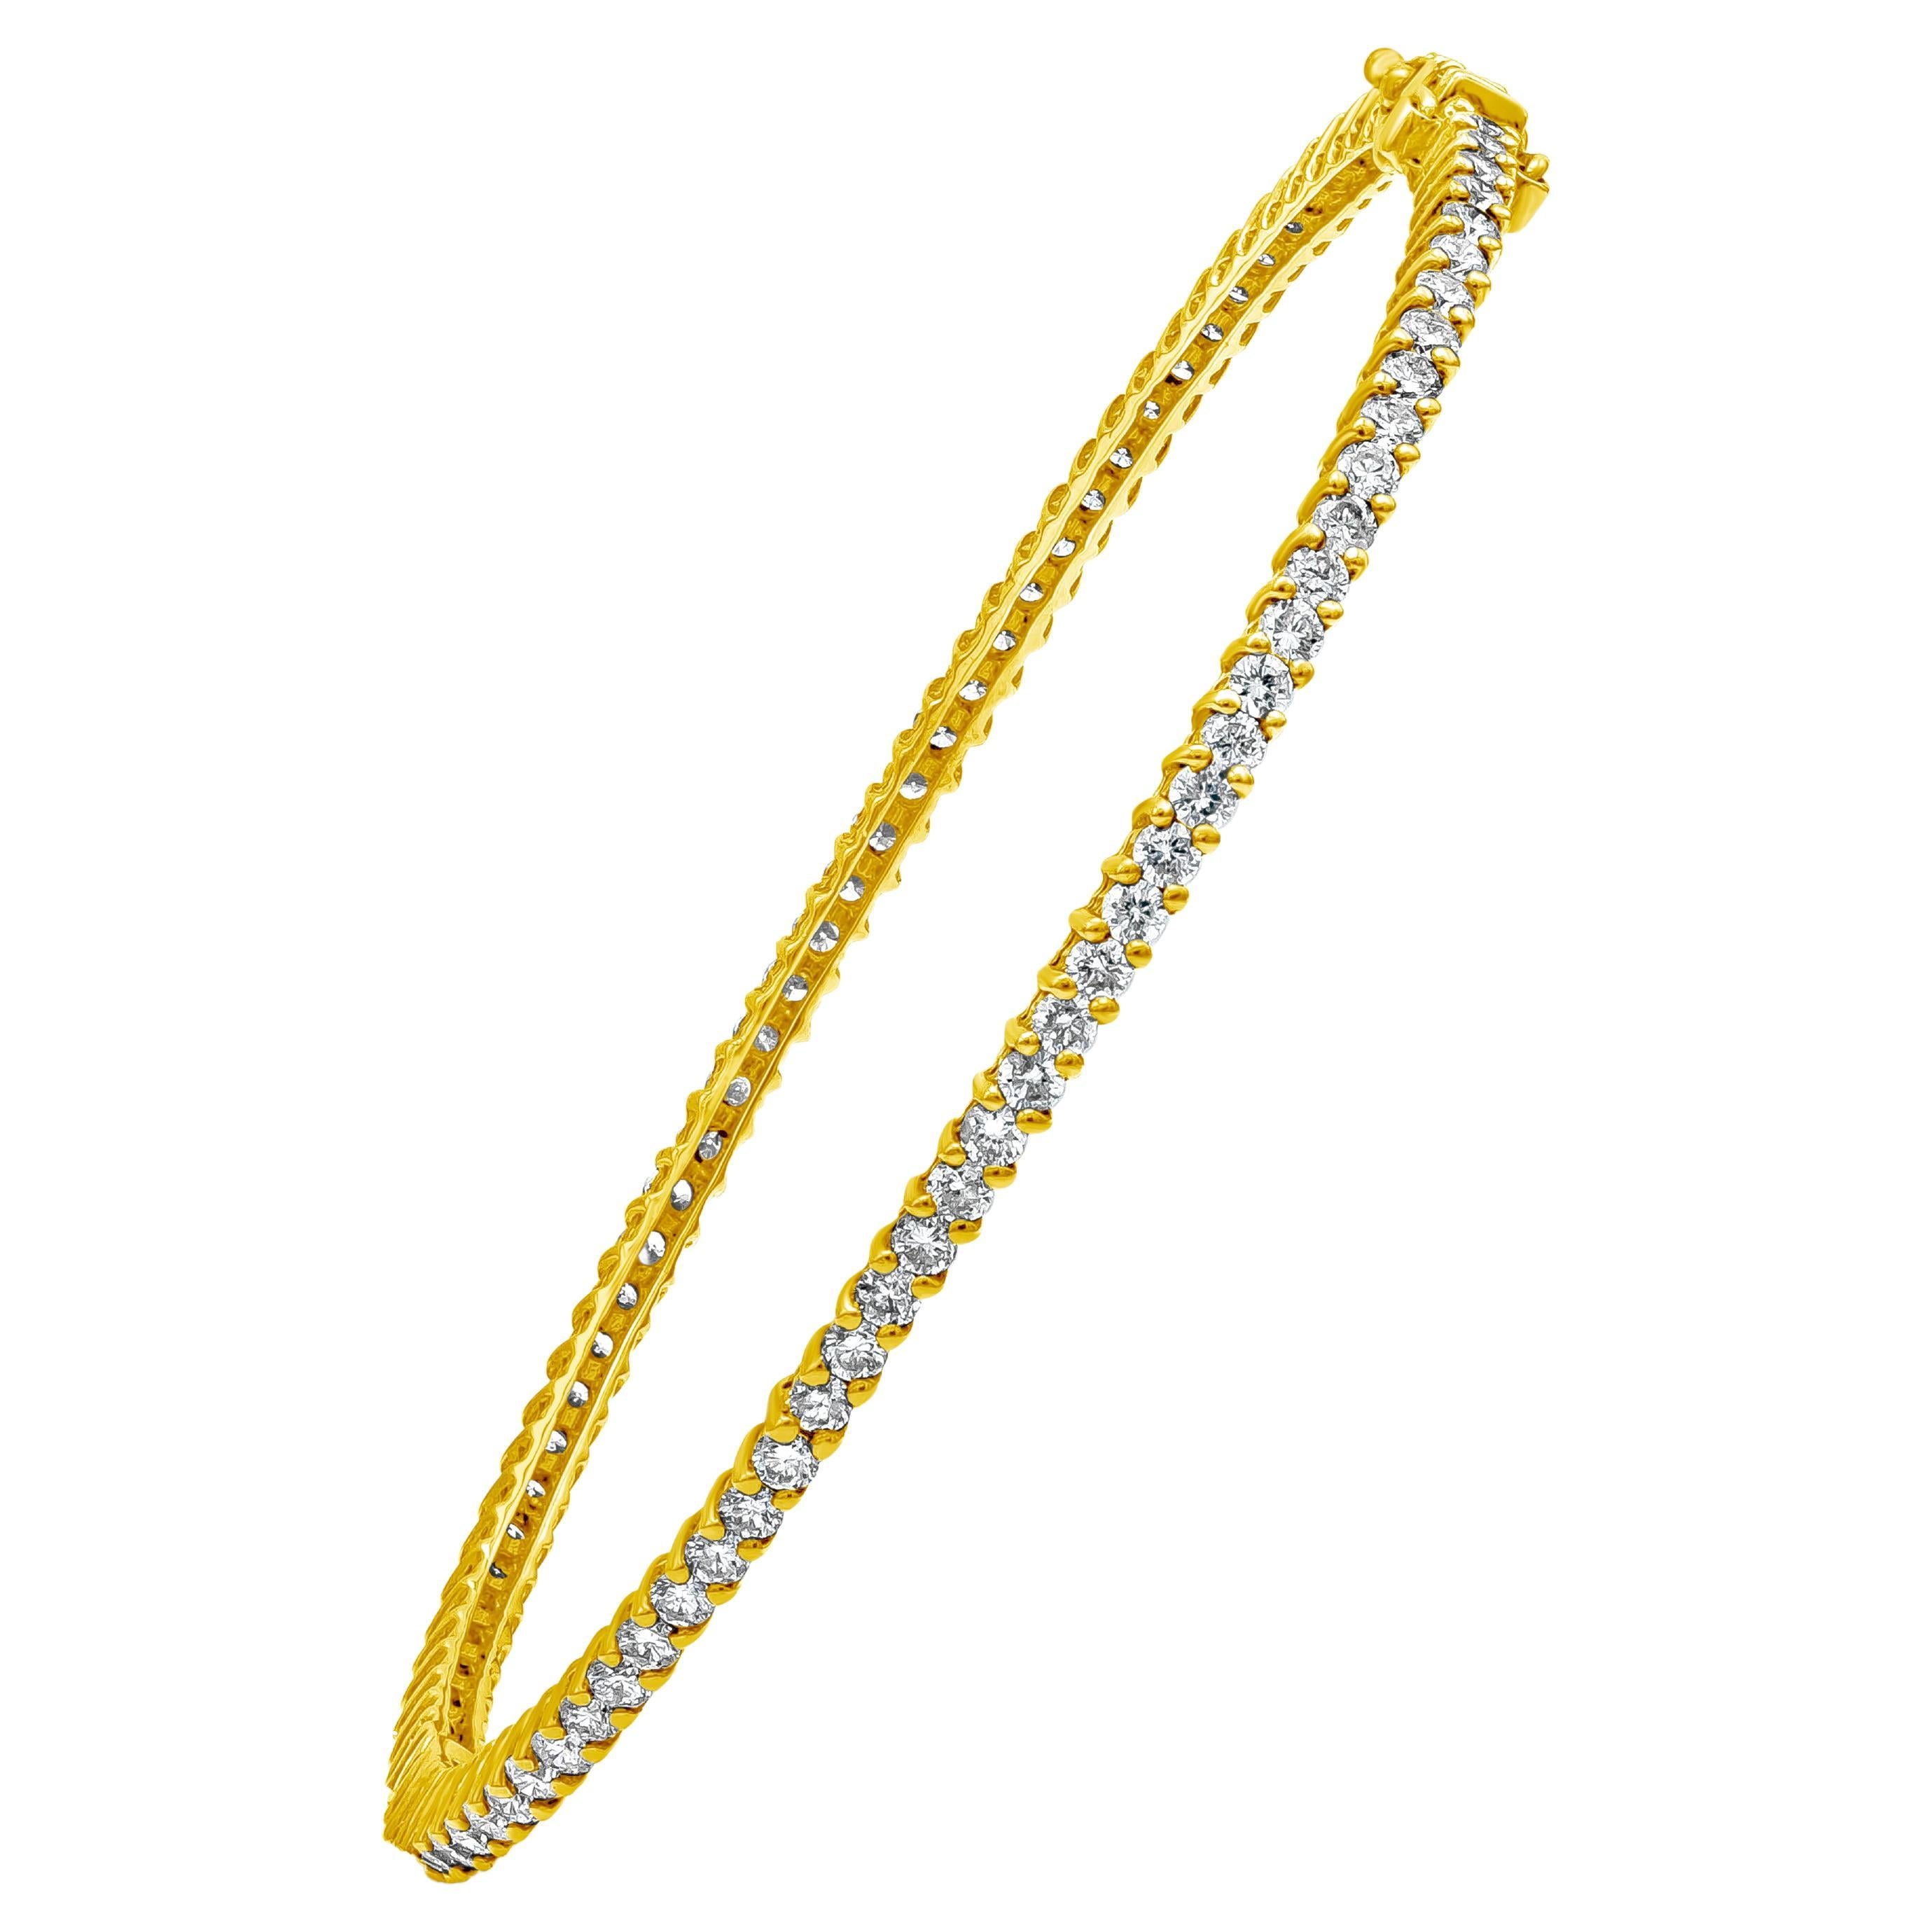 Roman Malakov 2.78 Carats Total Round Cut Diamond Eternity Bangle Bracelet For Sale